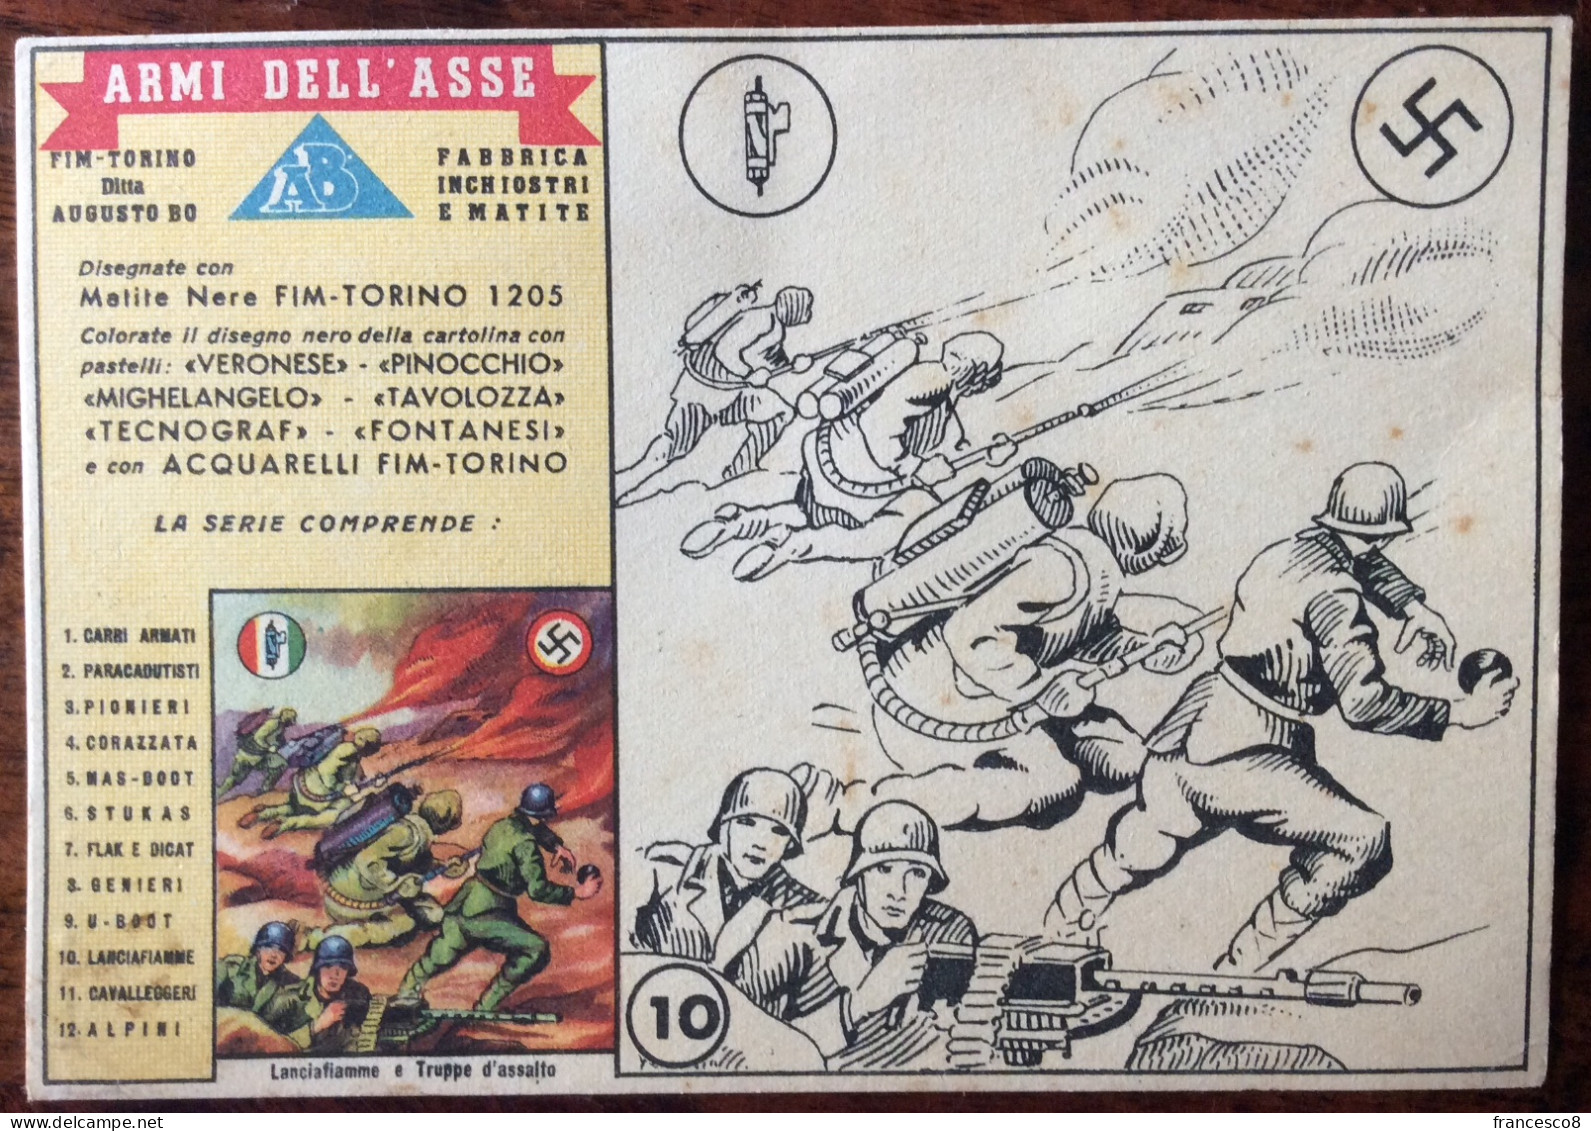 ARMI DELL'ASSE LANCIAFIAMME E TRUPPE D'ASSALTO / Fascismo - Oorlog 1939-45